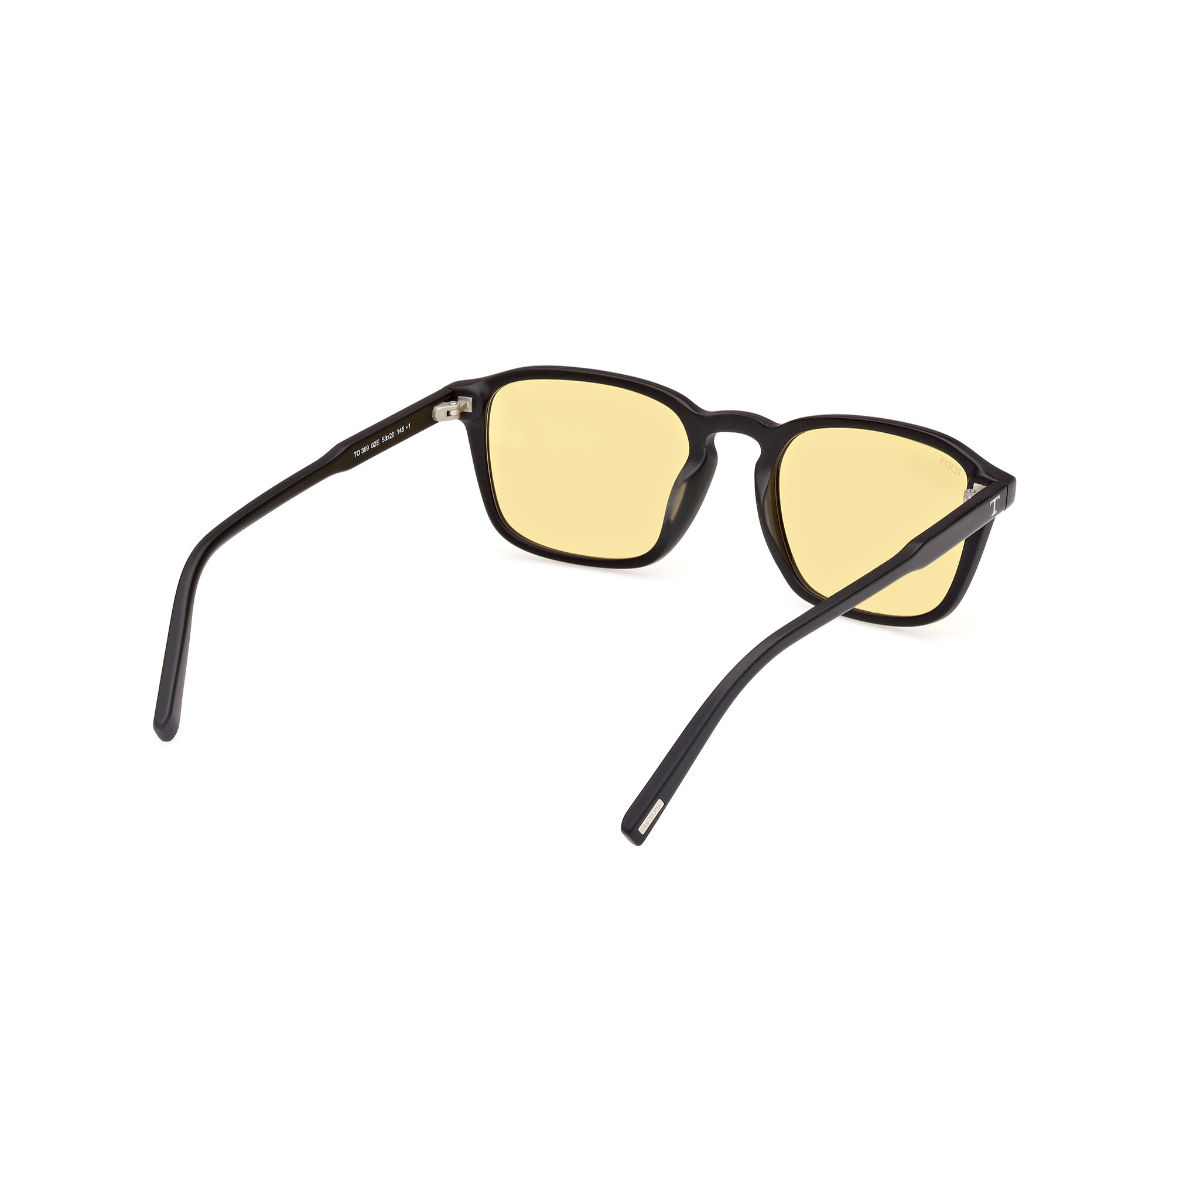 Buy TOD'S Black Acetate Sunglasses (53) Online